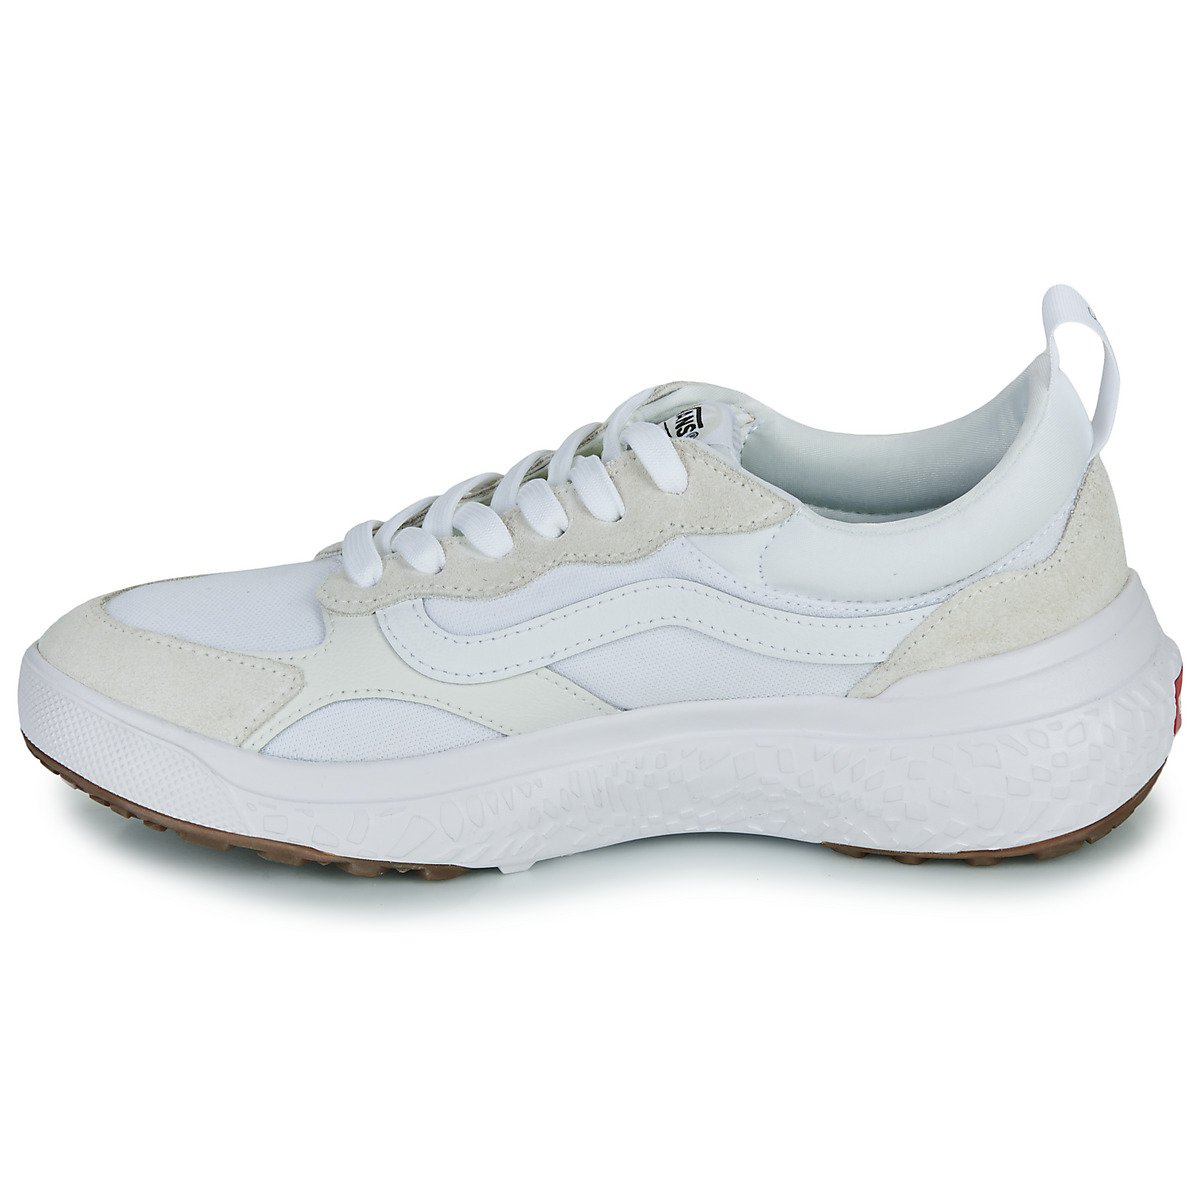 Shoes (Trainers) UltraRange Neo VR3 TRUE WHITE